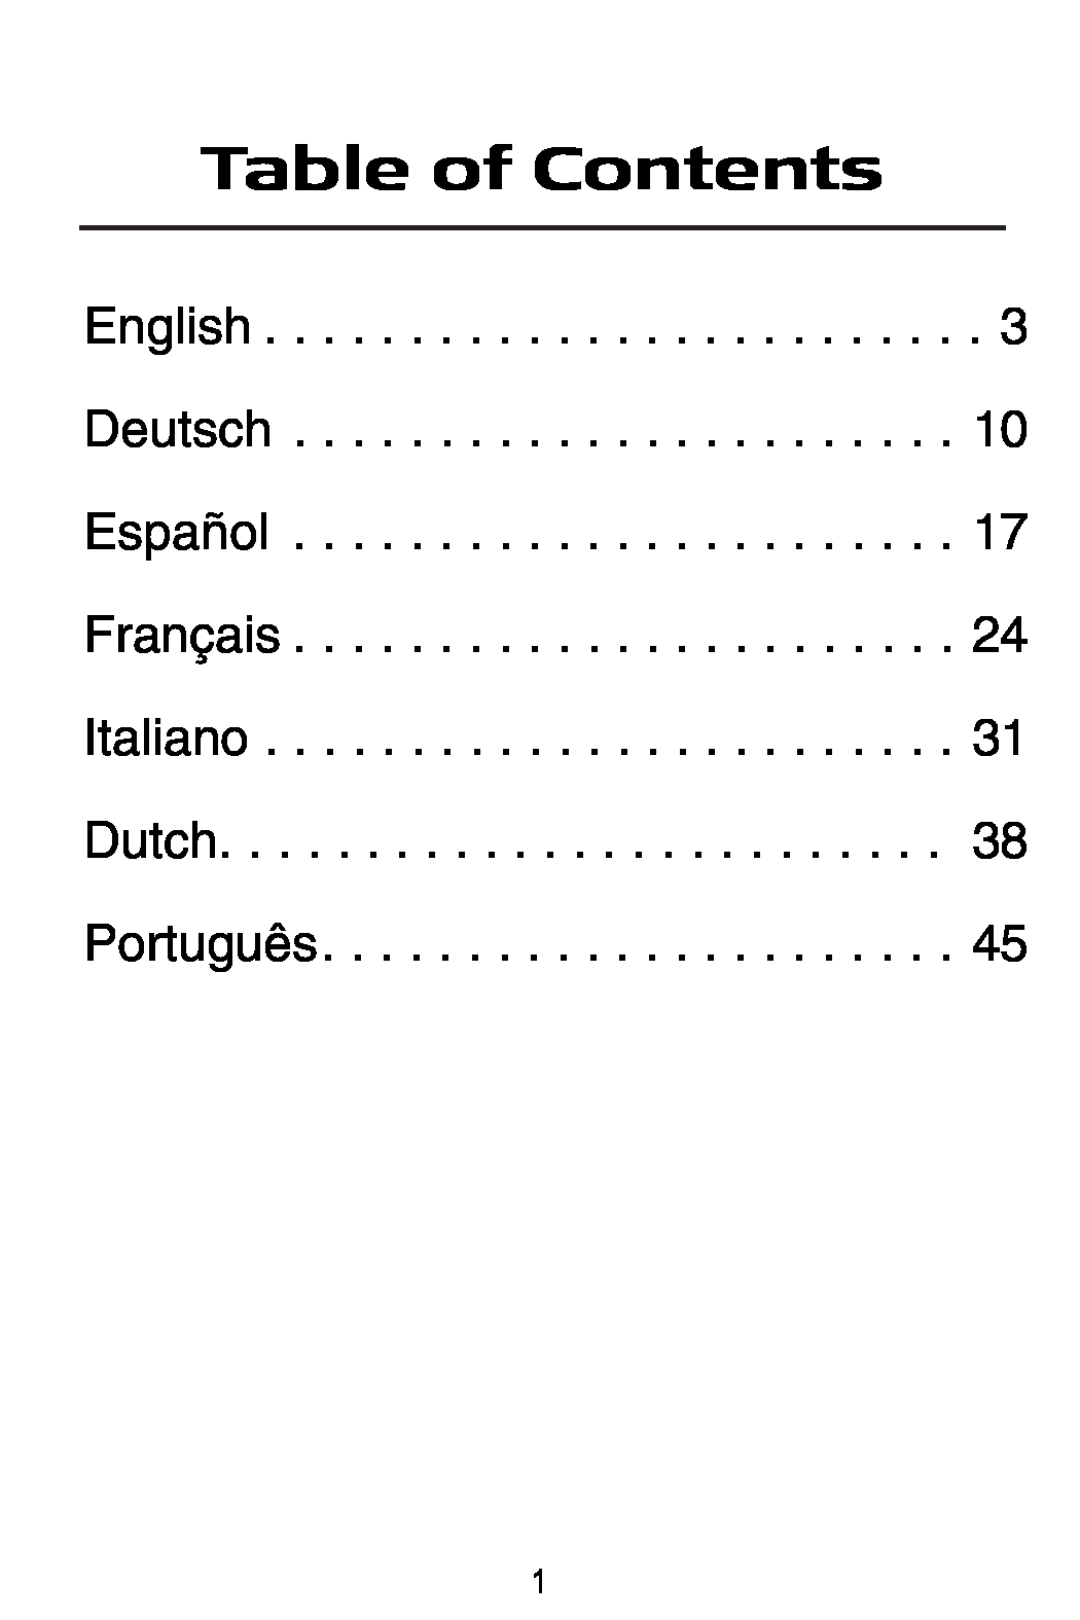 Targus slim internet multimedia USB keyboard Table of Contents, English Deutsch Español Français Italiano Dutch Português 